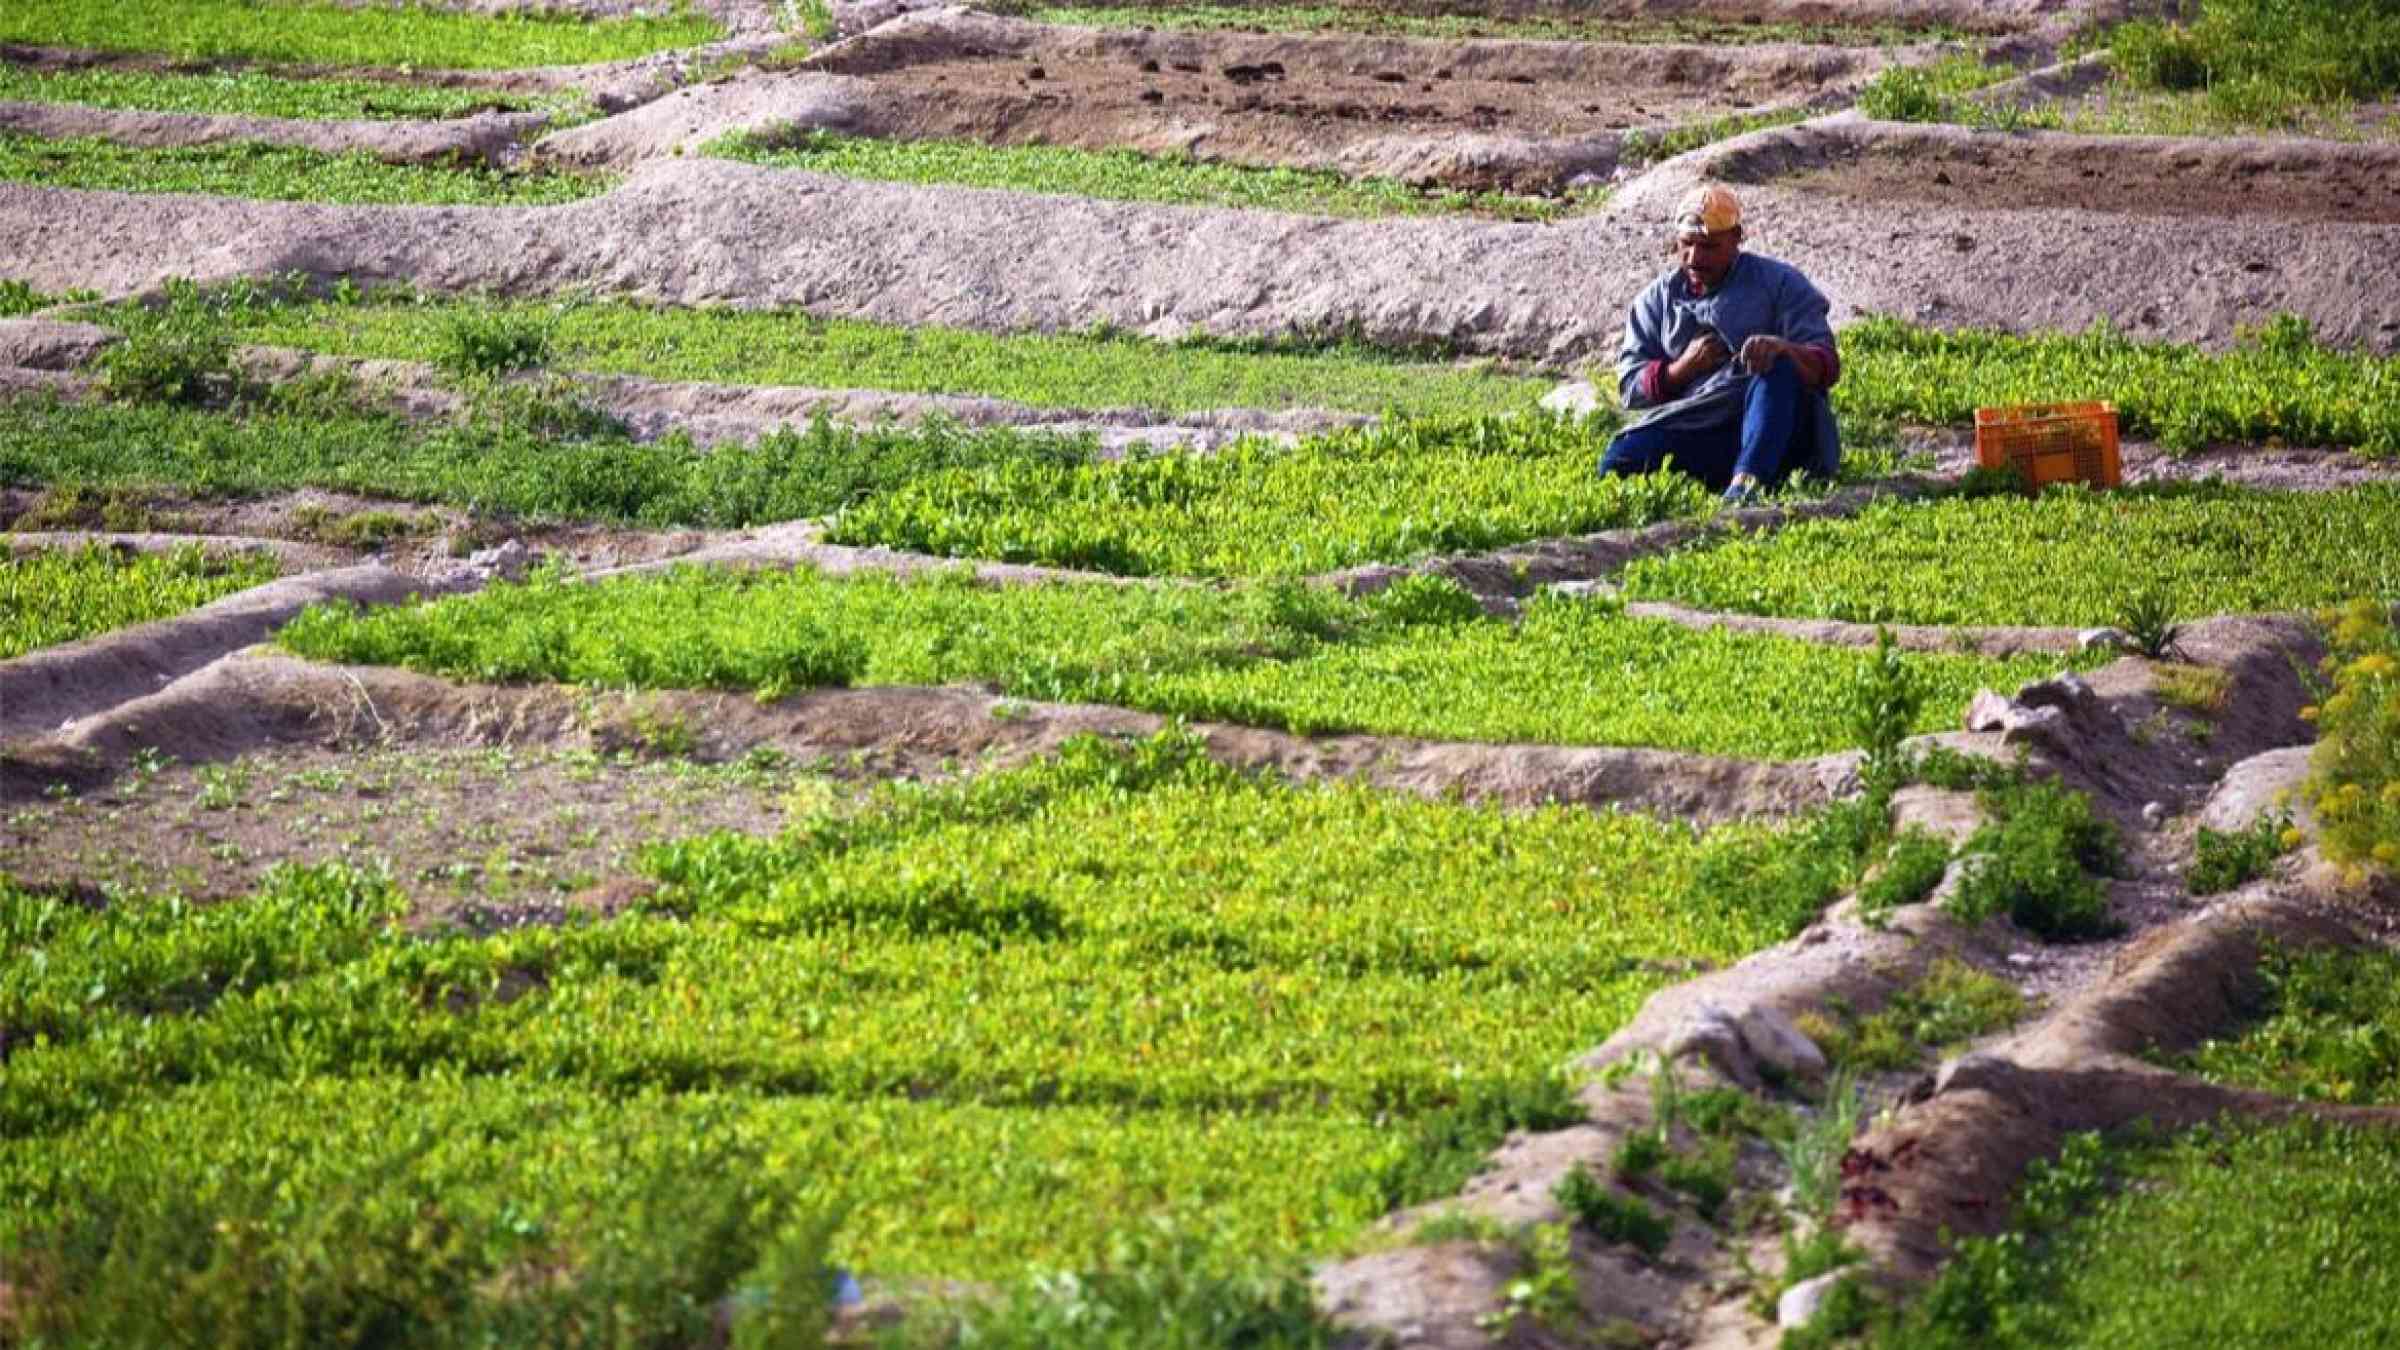 A Jordanian farmer observes his vegetable garden